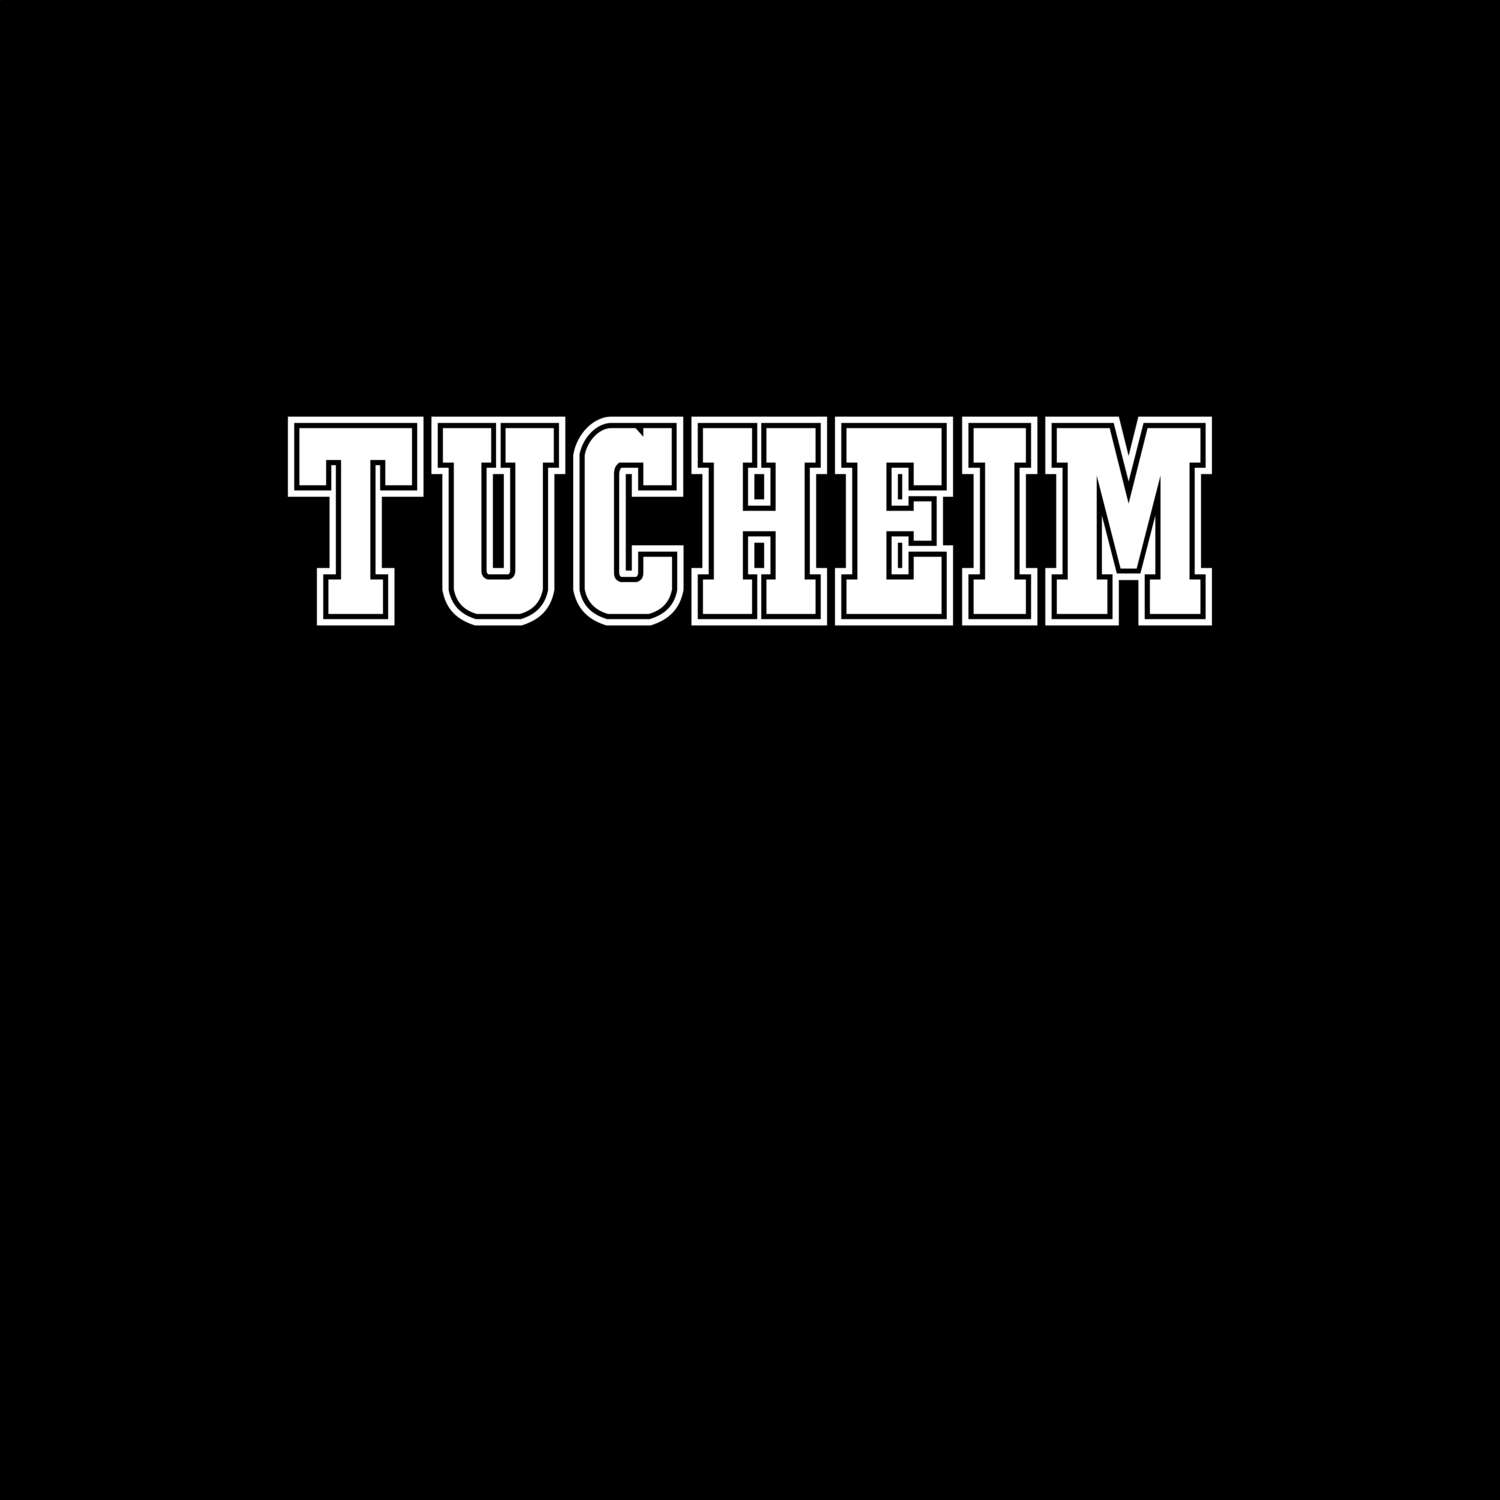 Tucheim T-Shirt »Classic«